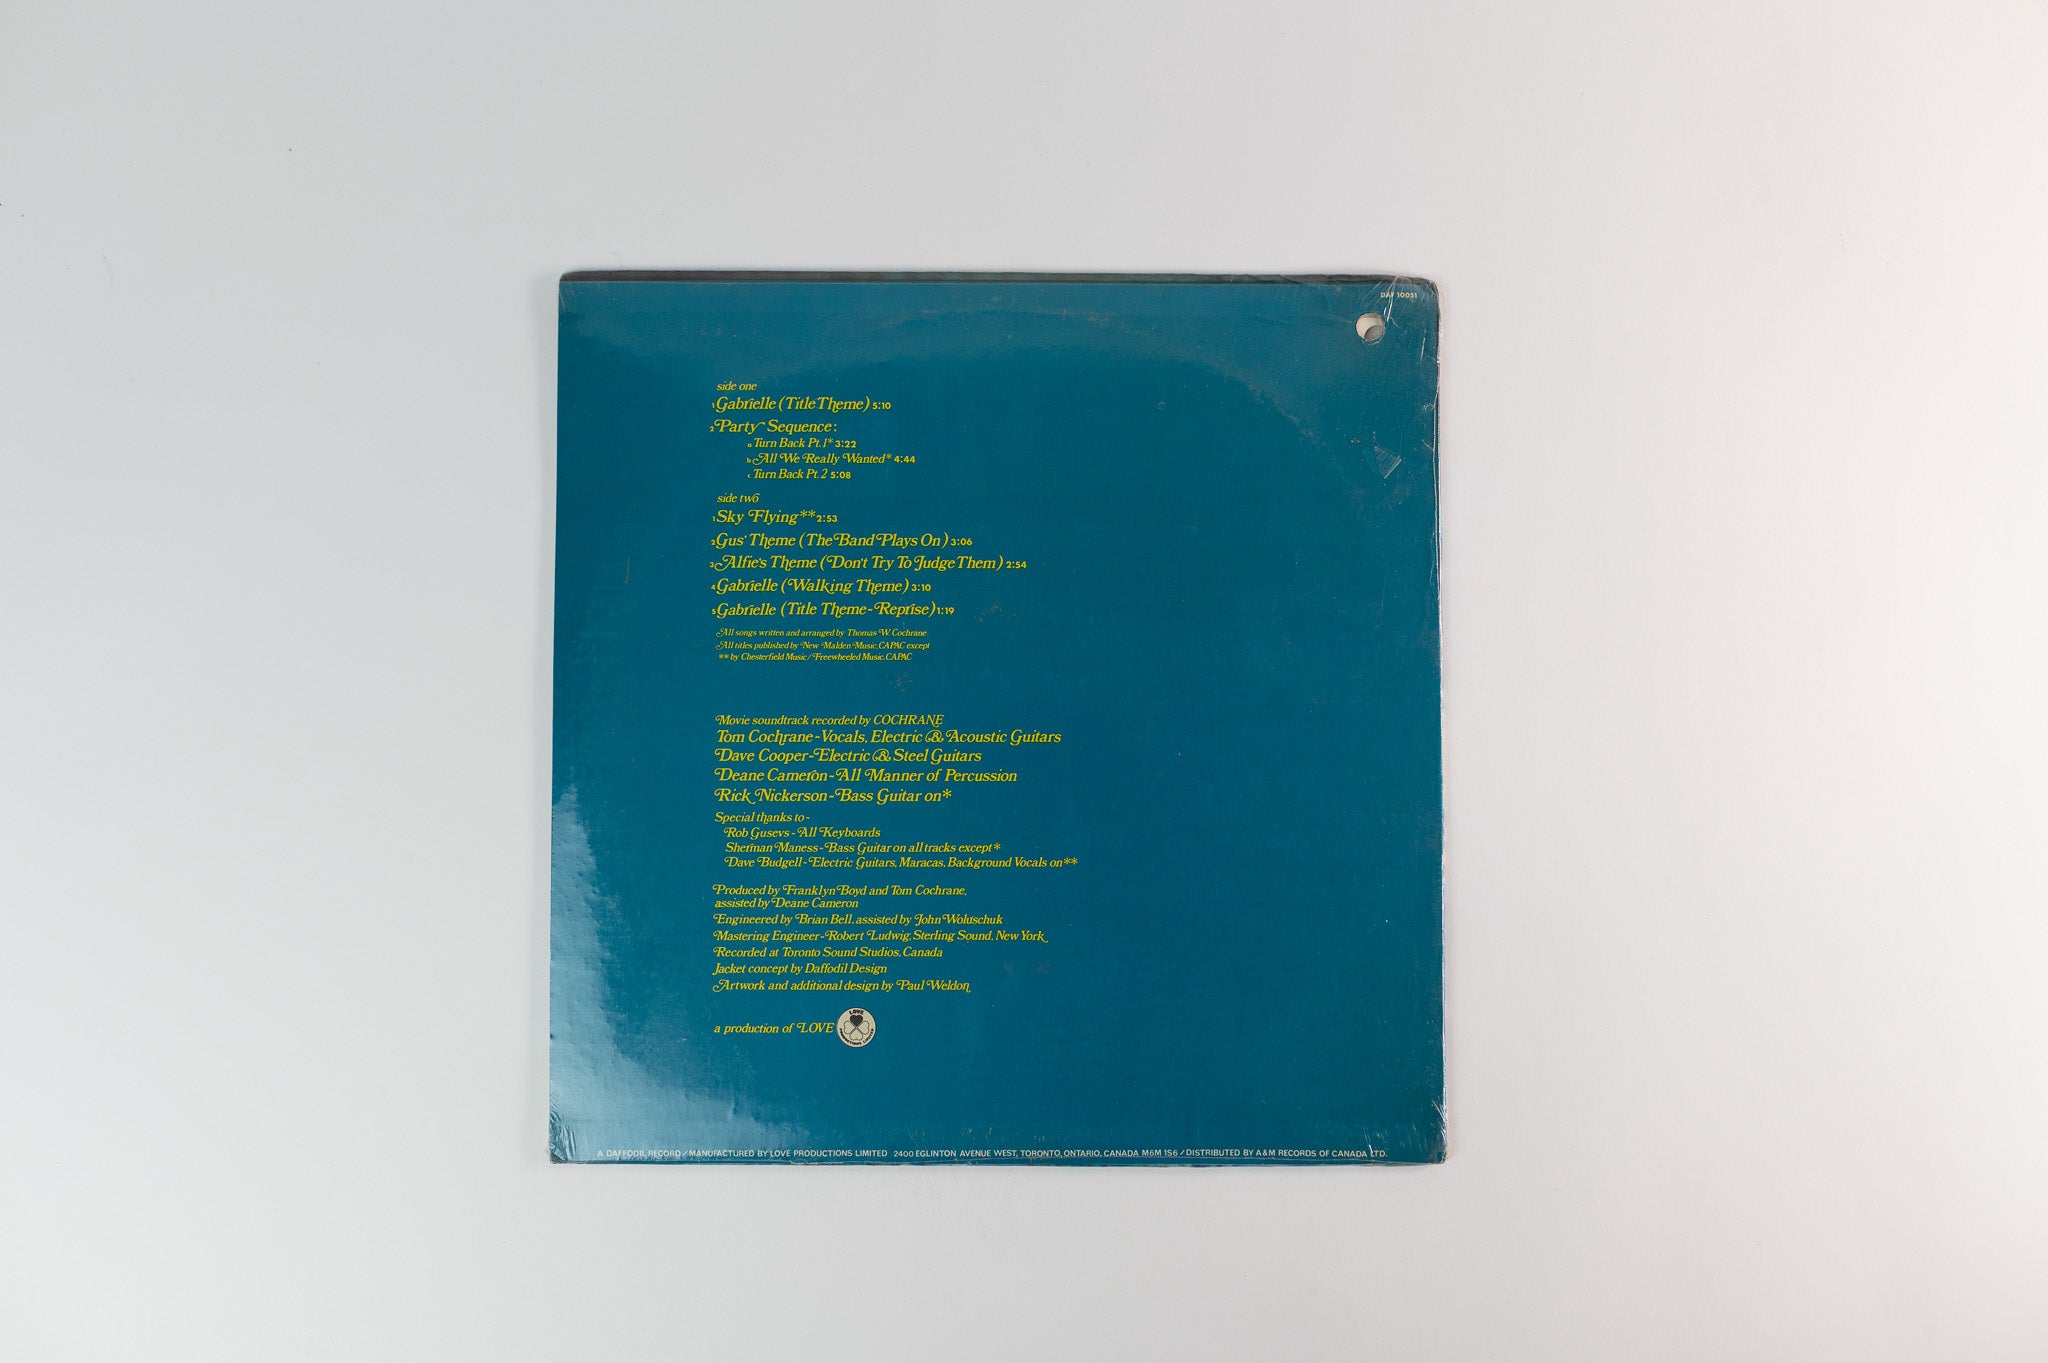 Tom Cochrane - My Pleasure Is My Business Soundtrack on Daffodil Sealed